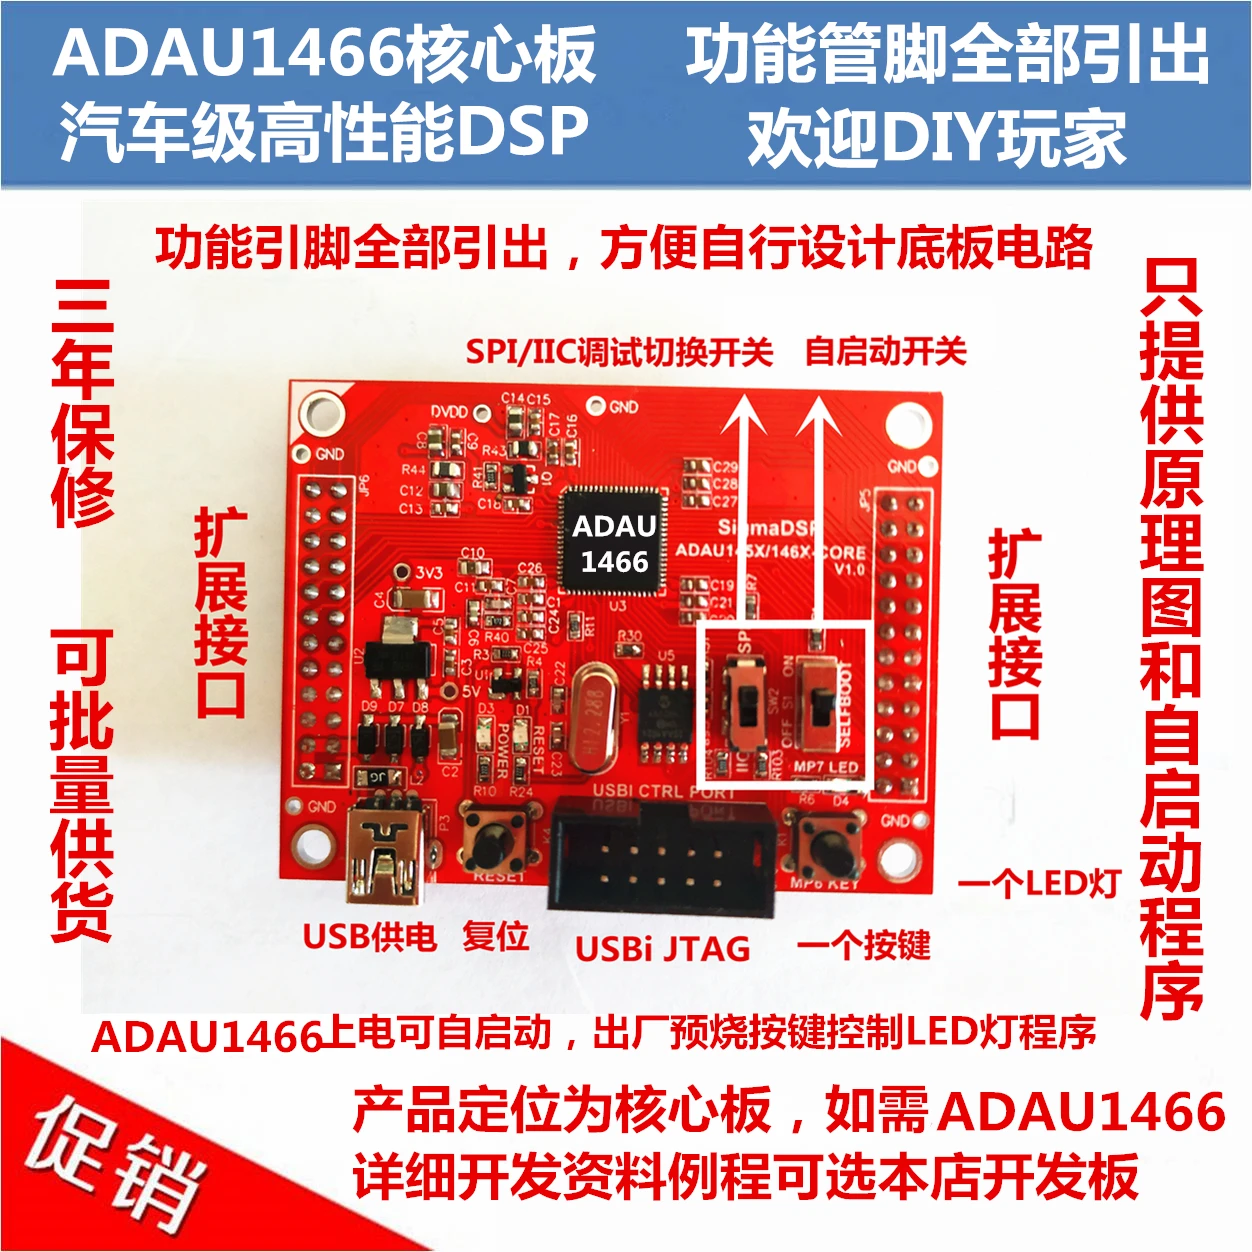 ADAU1466 core board /ADAU1466 development board/function key all out